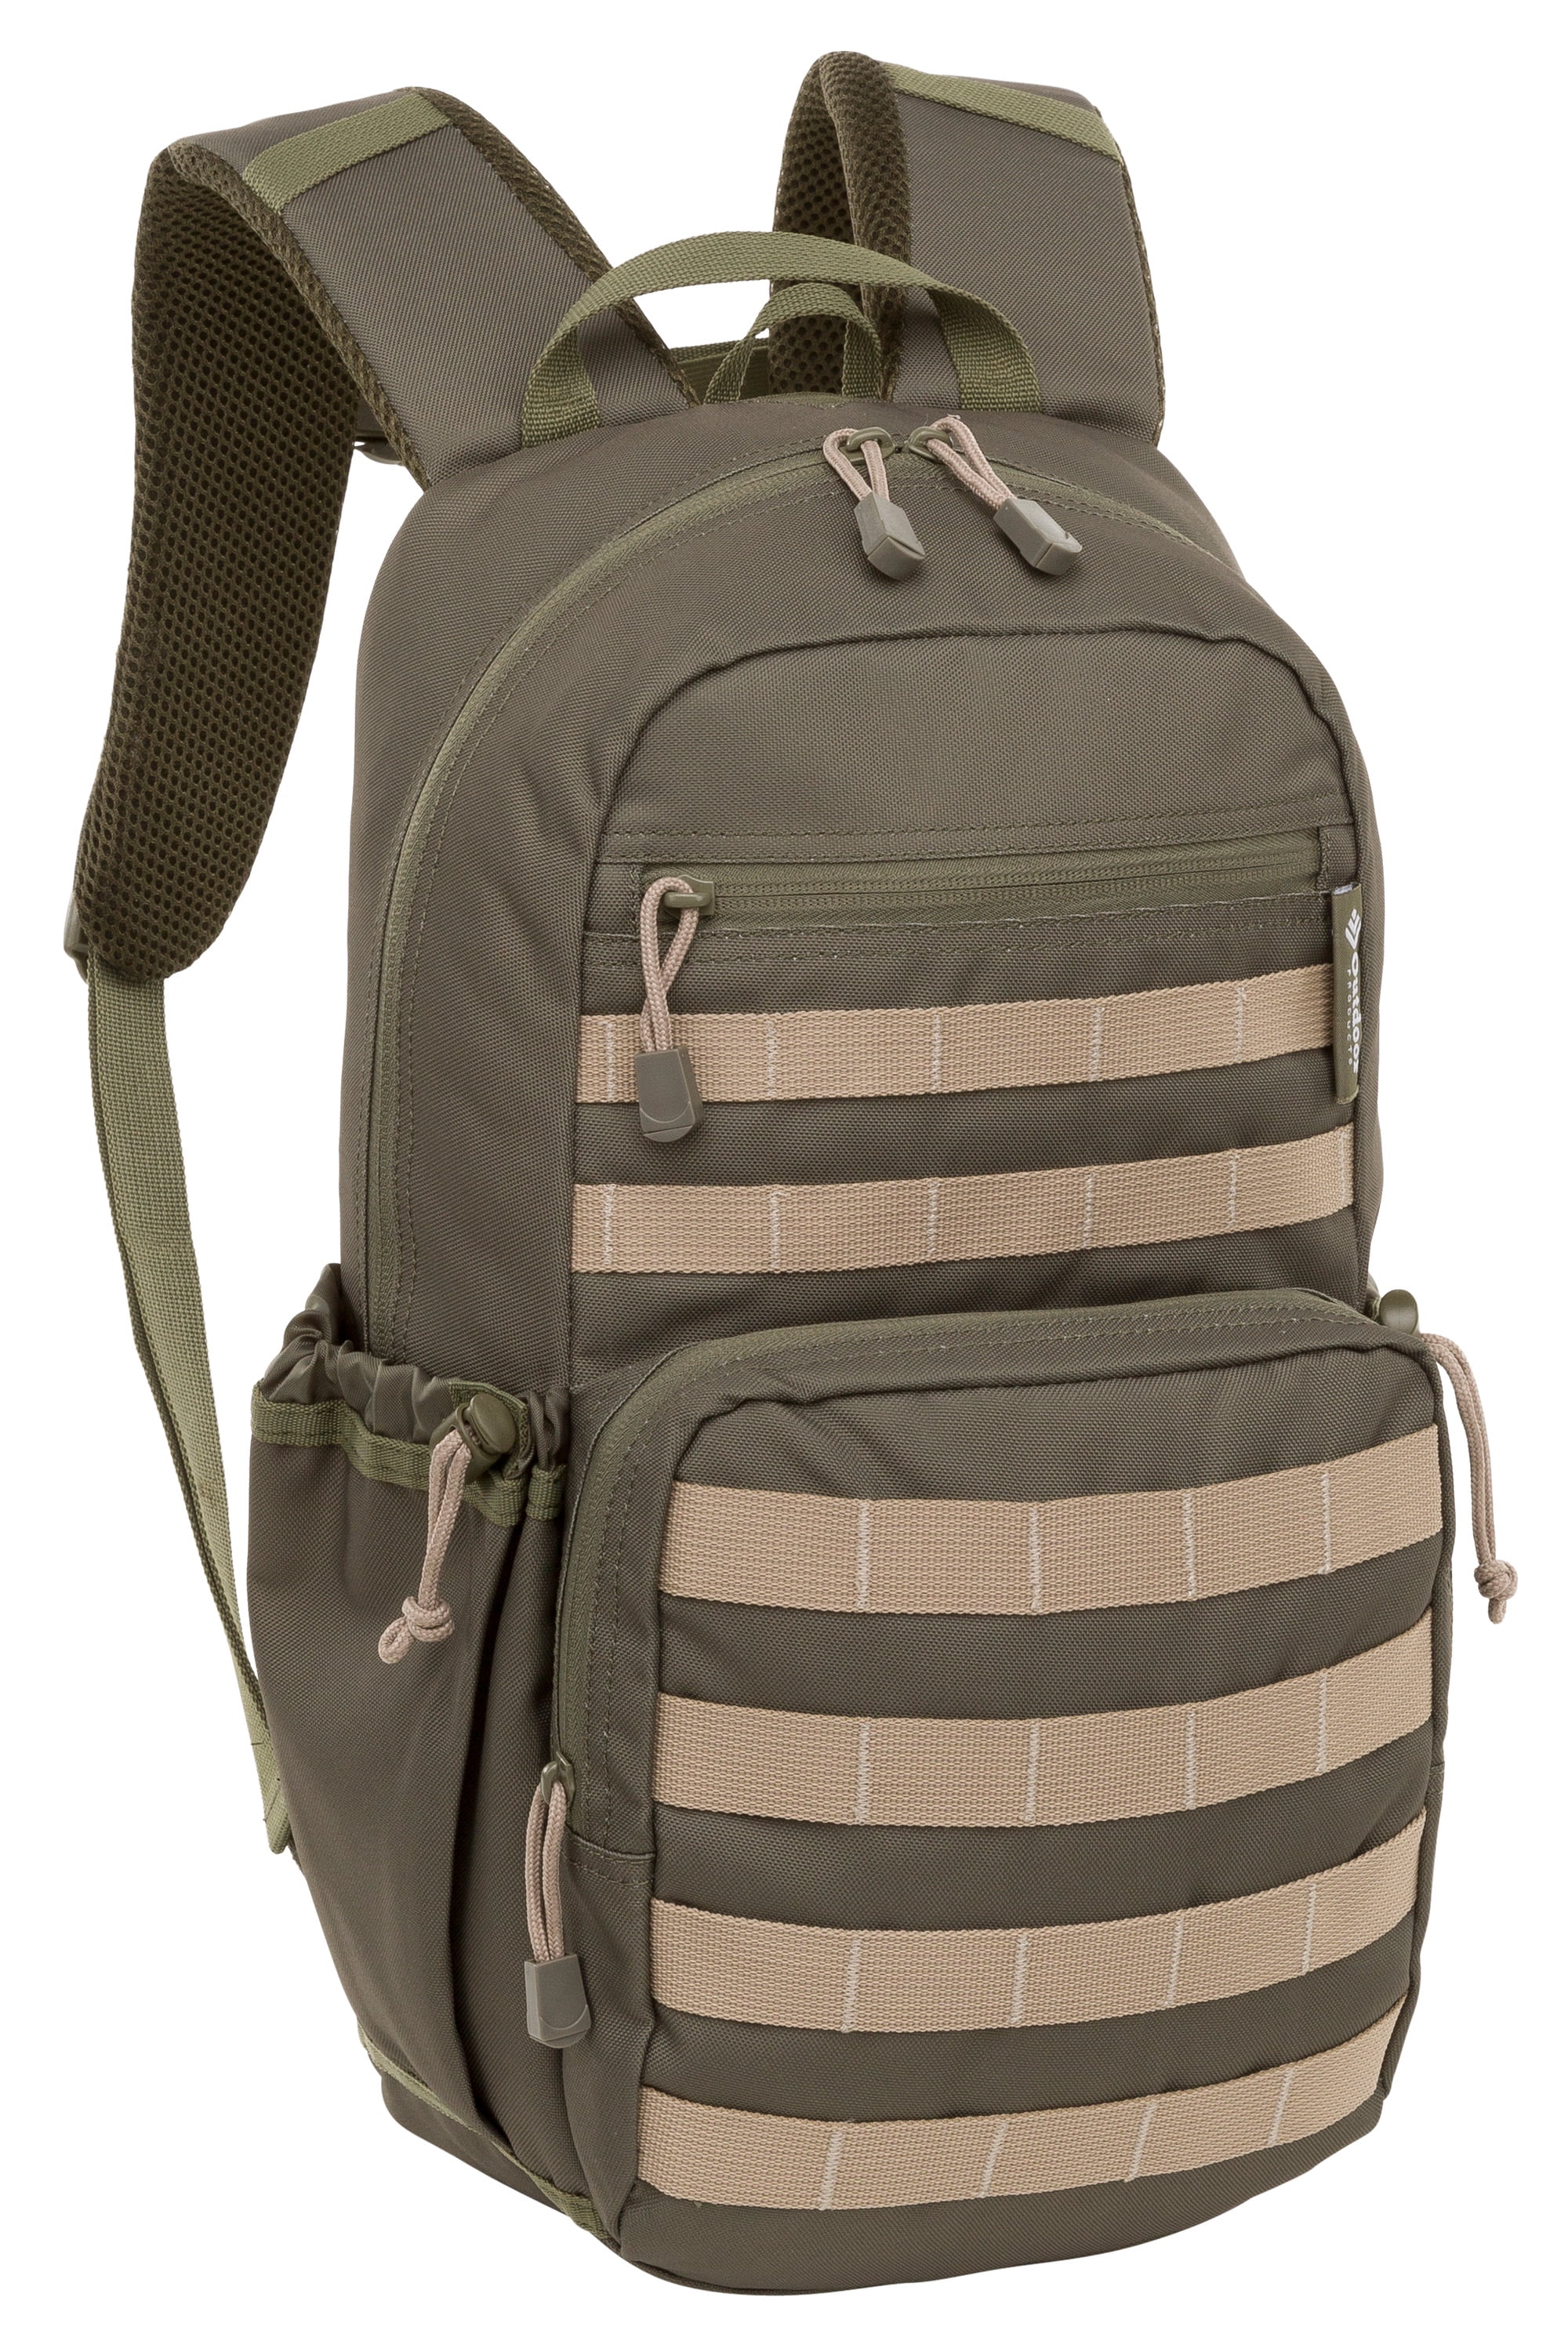 Outdoor Travel Hiking Sport Rucksack Day Pack Removable Hunting Backpack Bag 